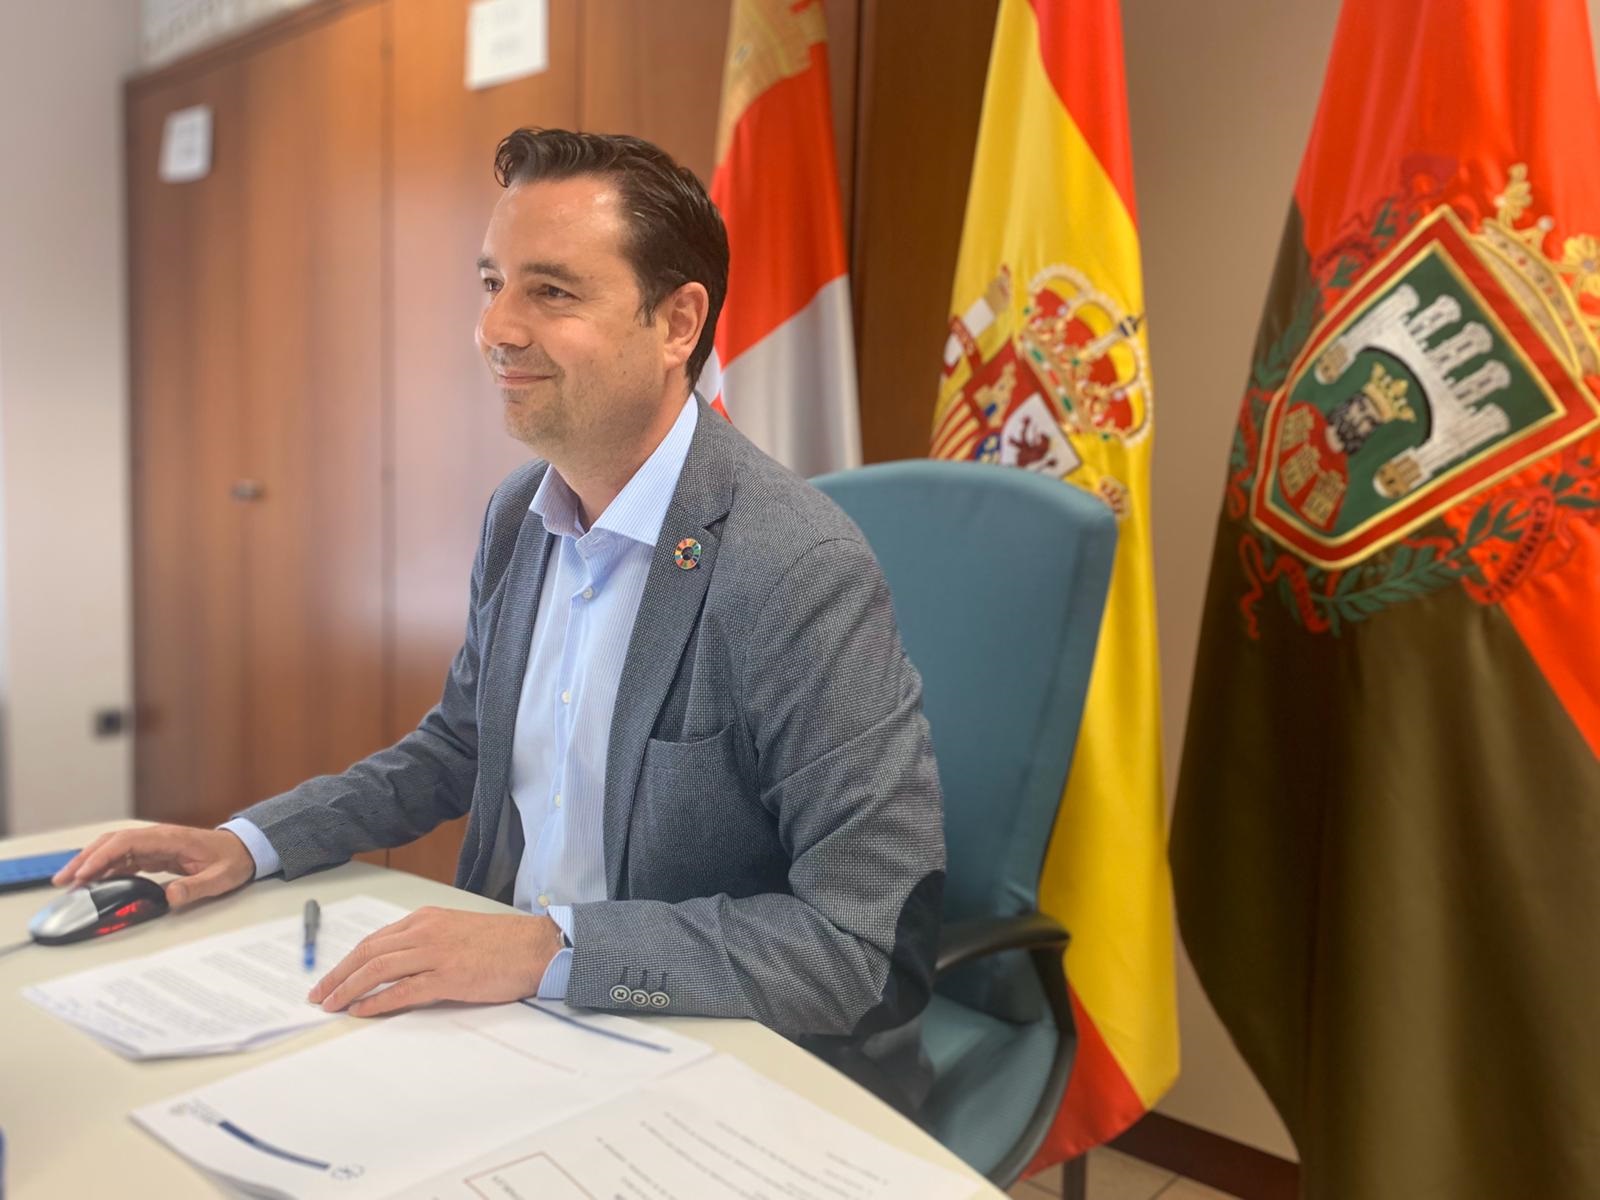 El alcalde de Burgos, Daniel de la Rosa, ha presidido esta mañana la Asamblea General de la Red de Ciudades Saludables (RECS)